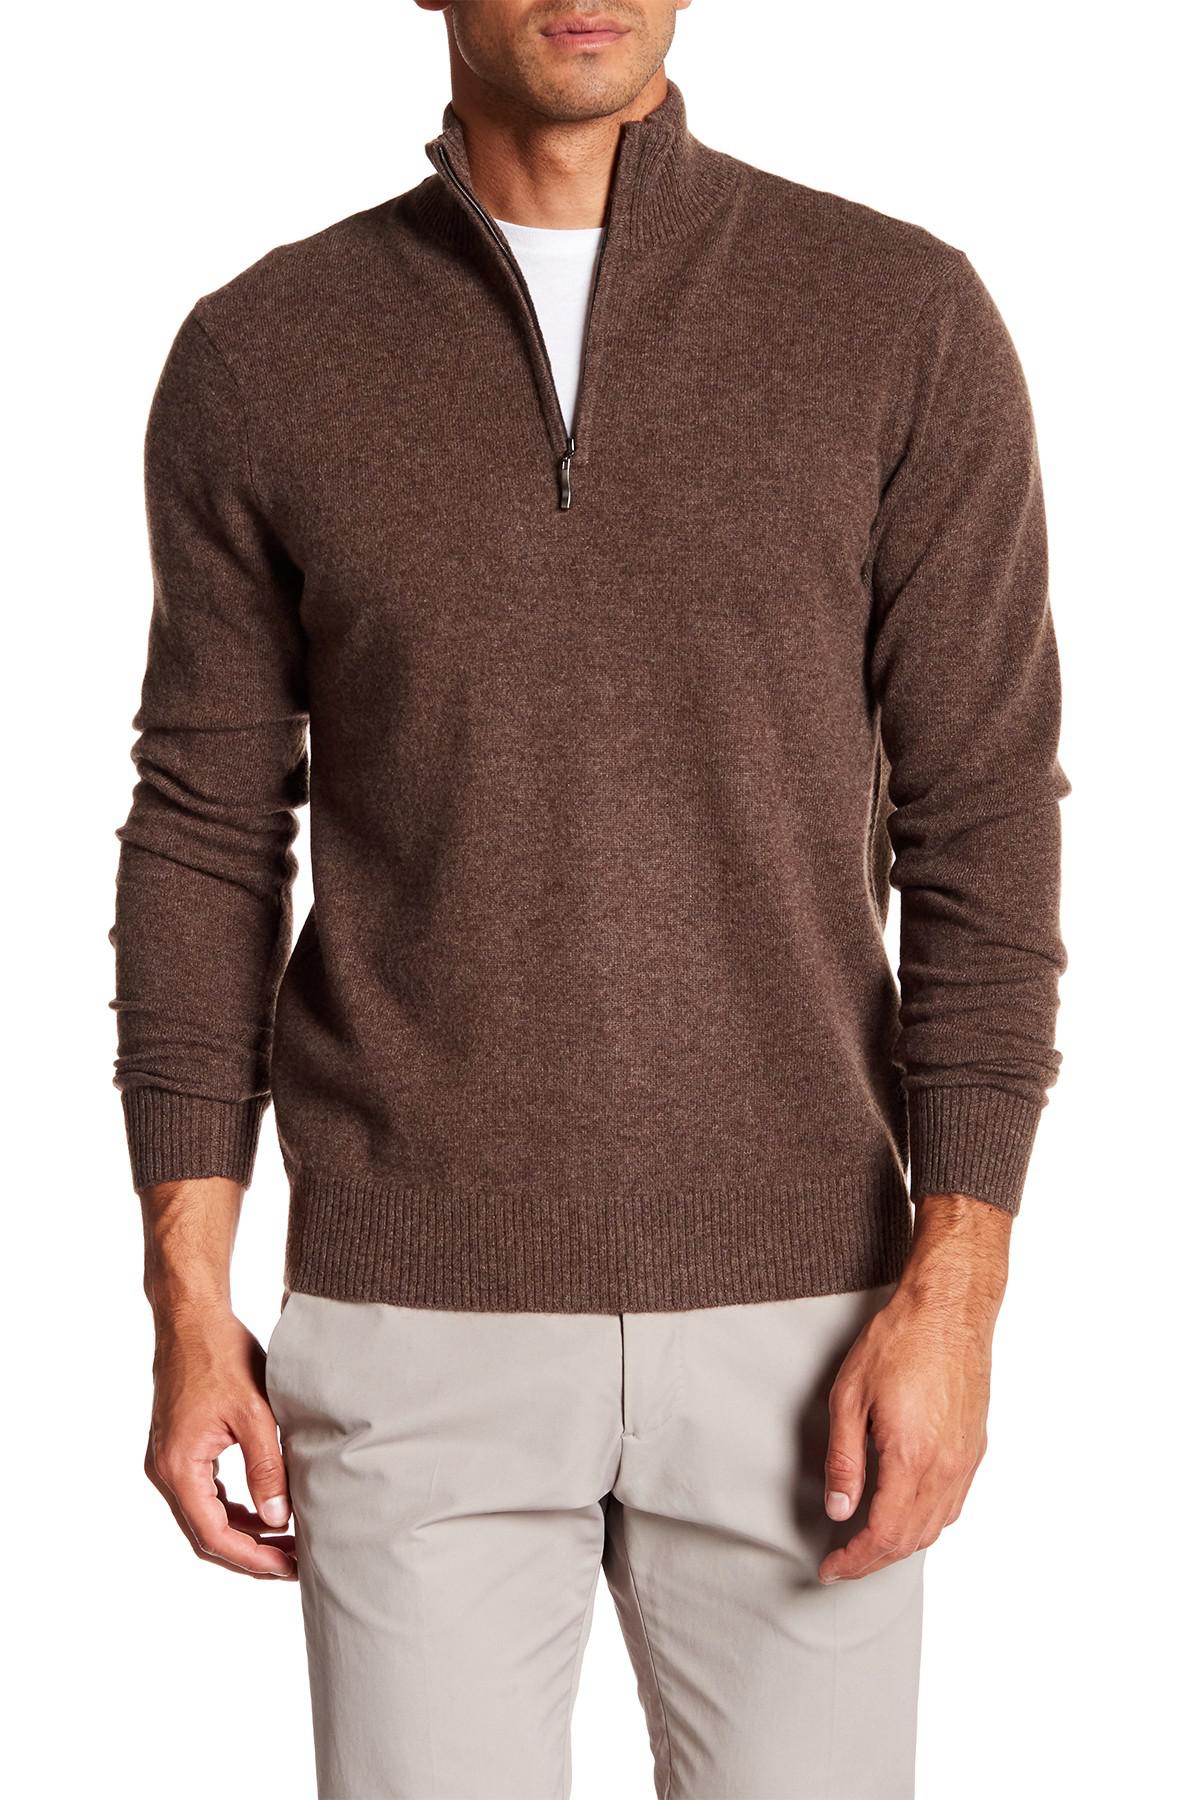 Lyst - Qi Cashmere Half Zip Sweater in Brown for Men